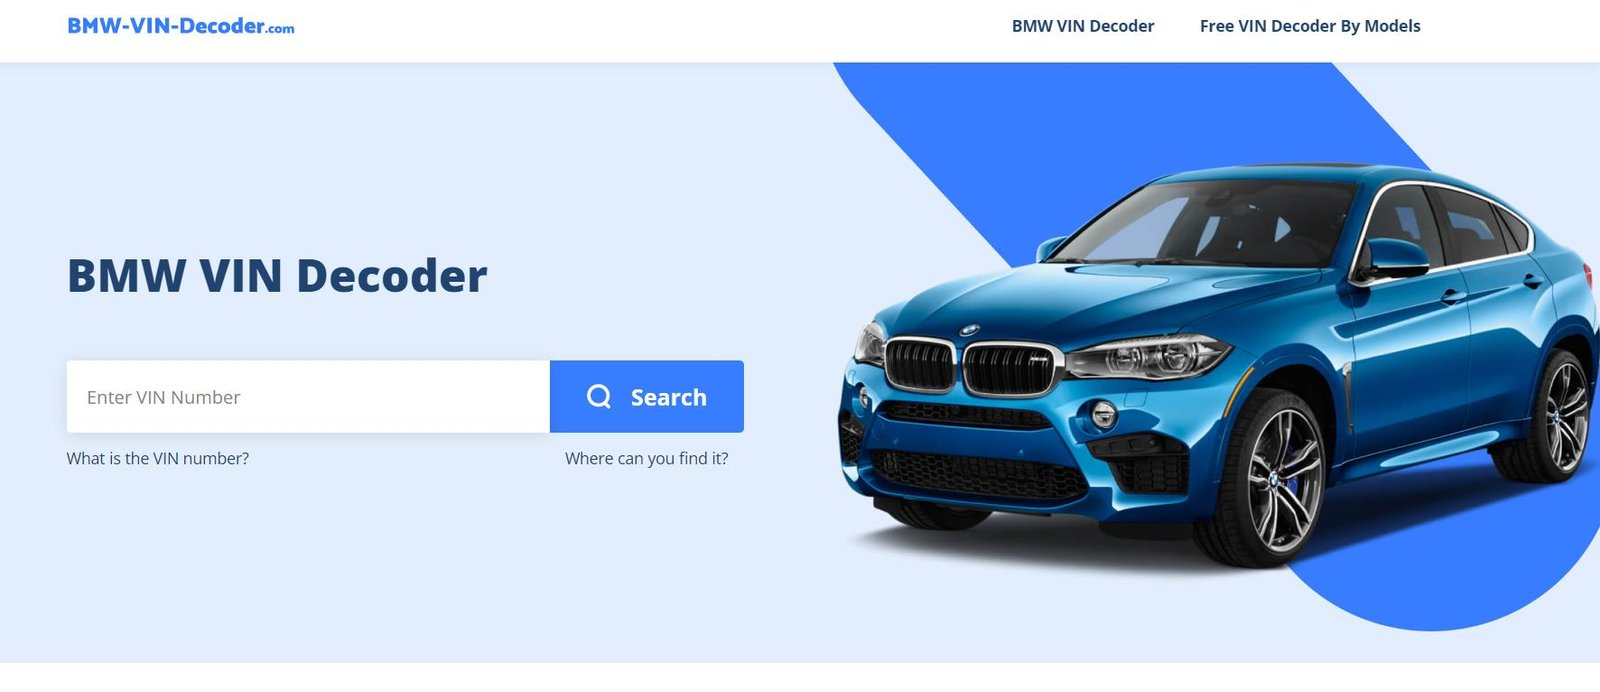 BMW-VIN-Decoder Review